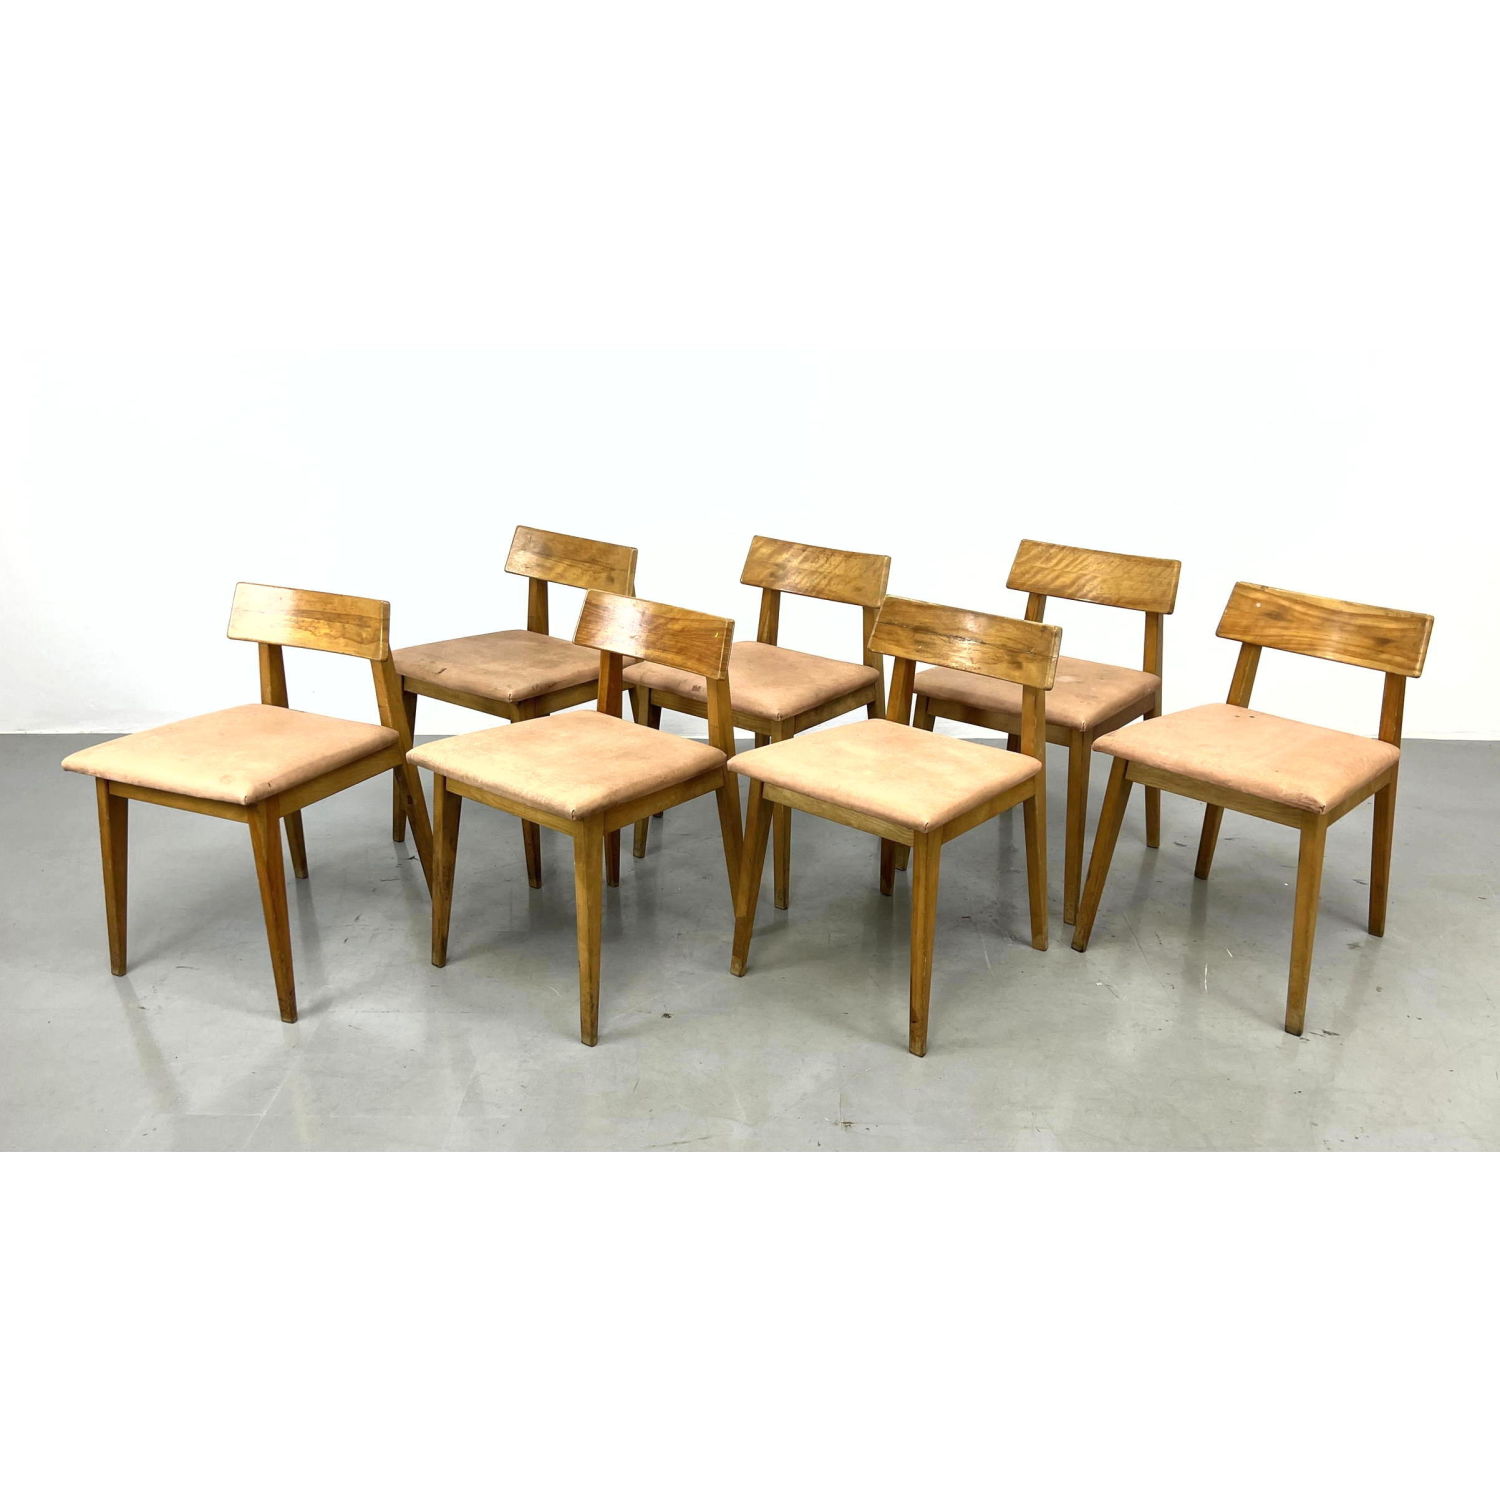 Set 7 Janet Rosenblum dining chairs